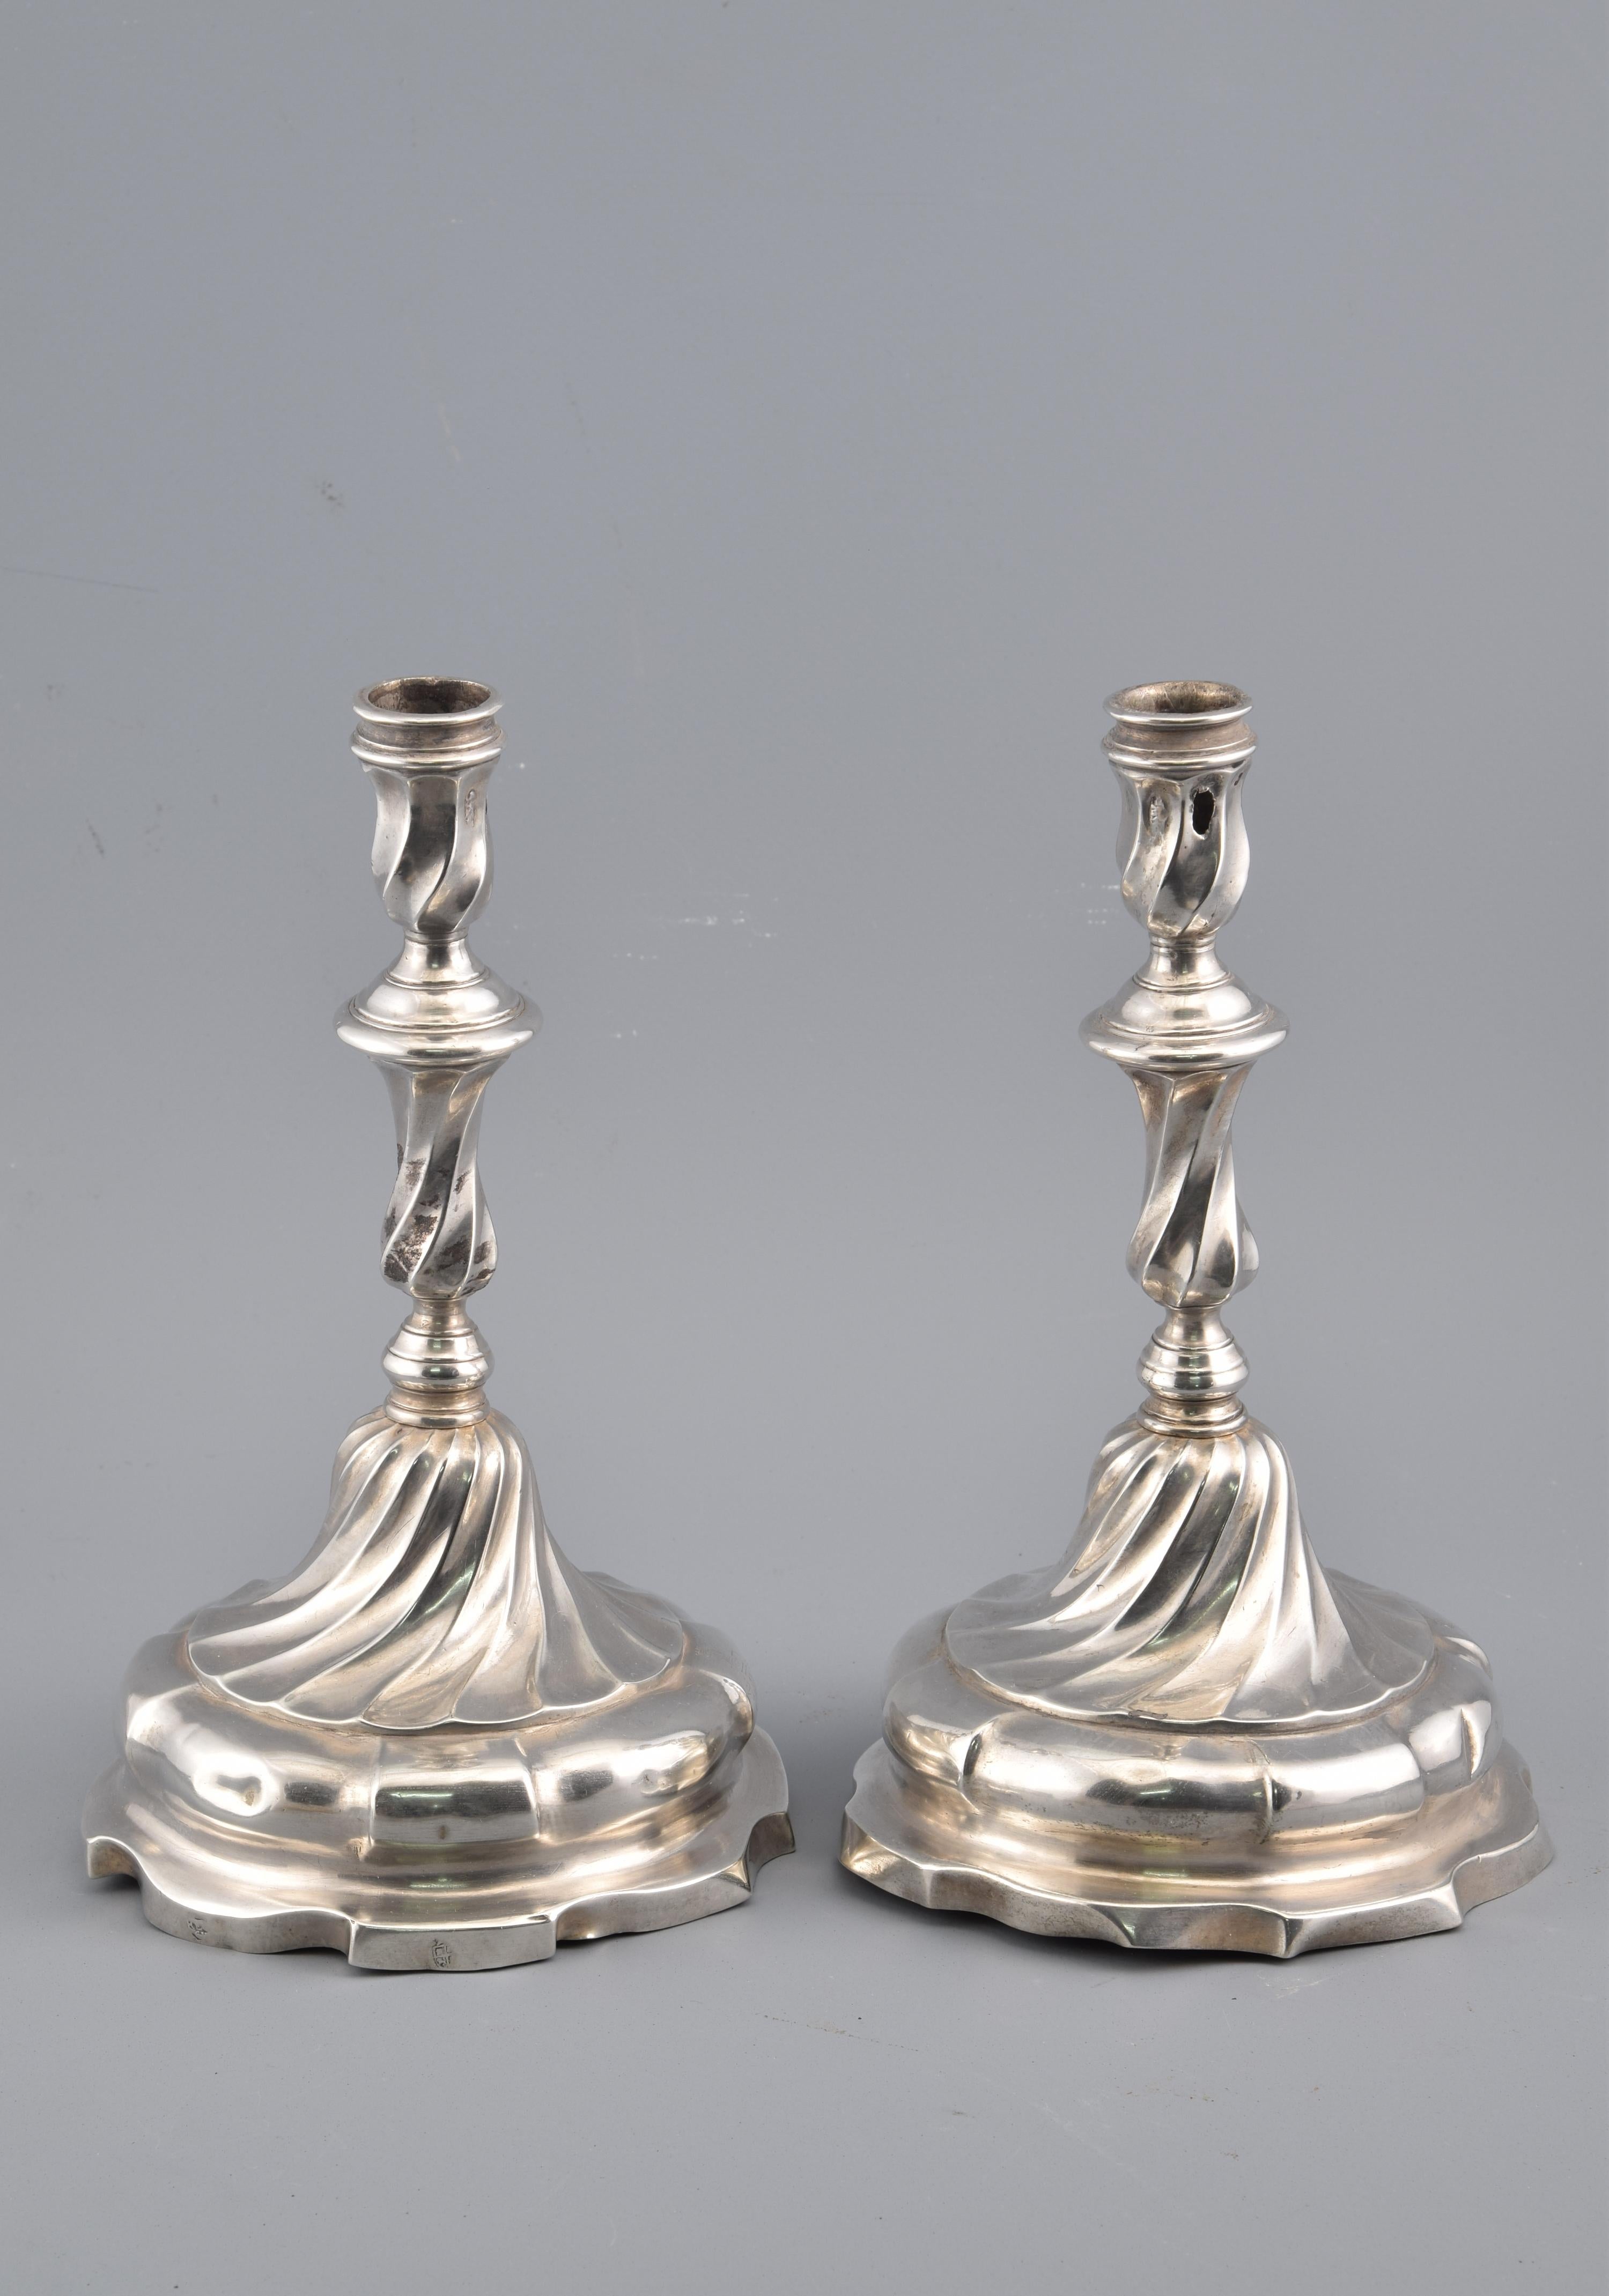 Pair of Silver Candlesticks or Candleholders, Possibly González Téllez, Antonio 1